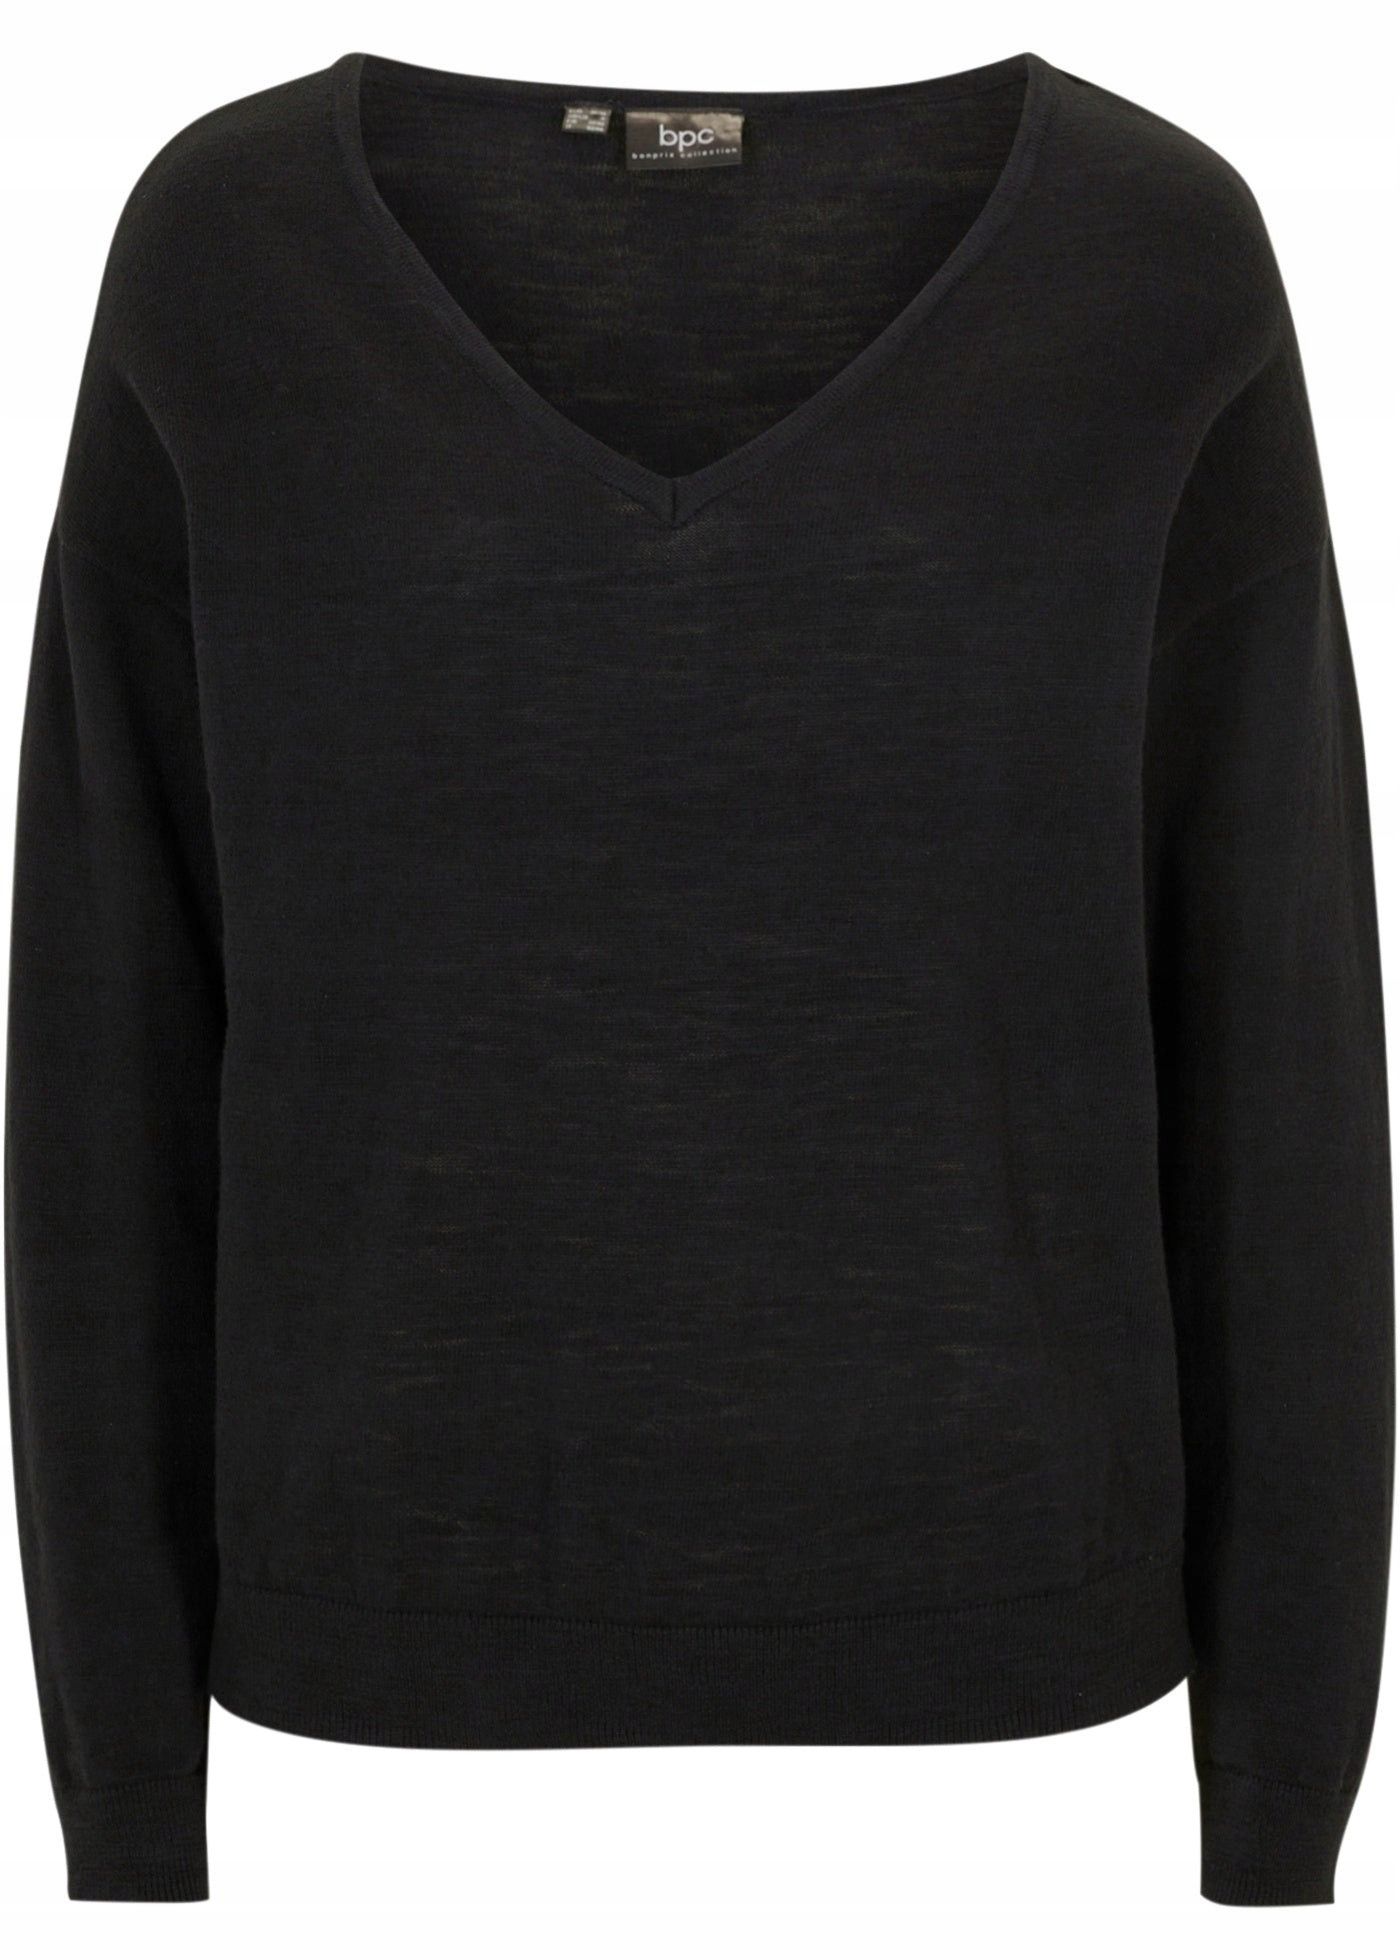 B.P.C bluzka dzianinowa czarna sweterek w serek ^36/38